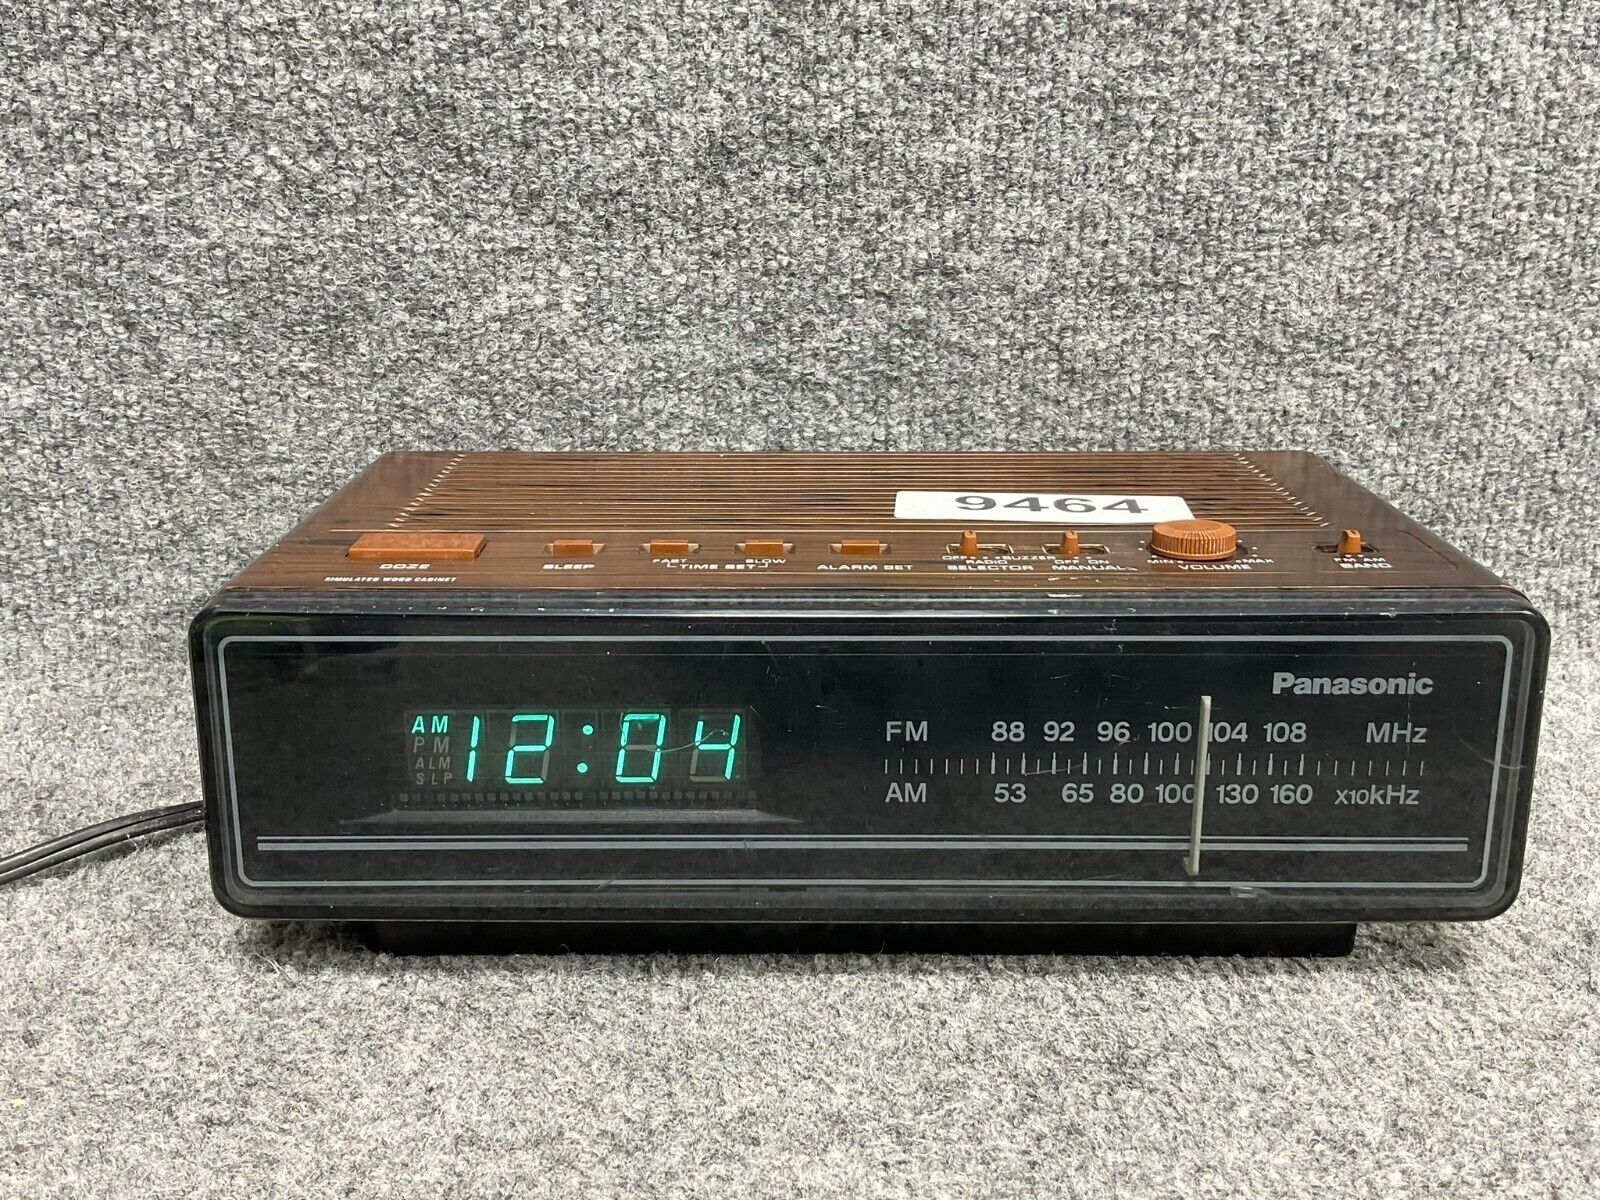 Panasonic RC-65 AM FM Digital Alarm Clock Radio